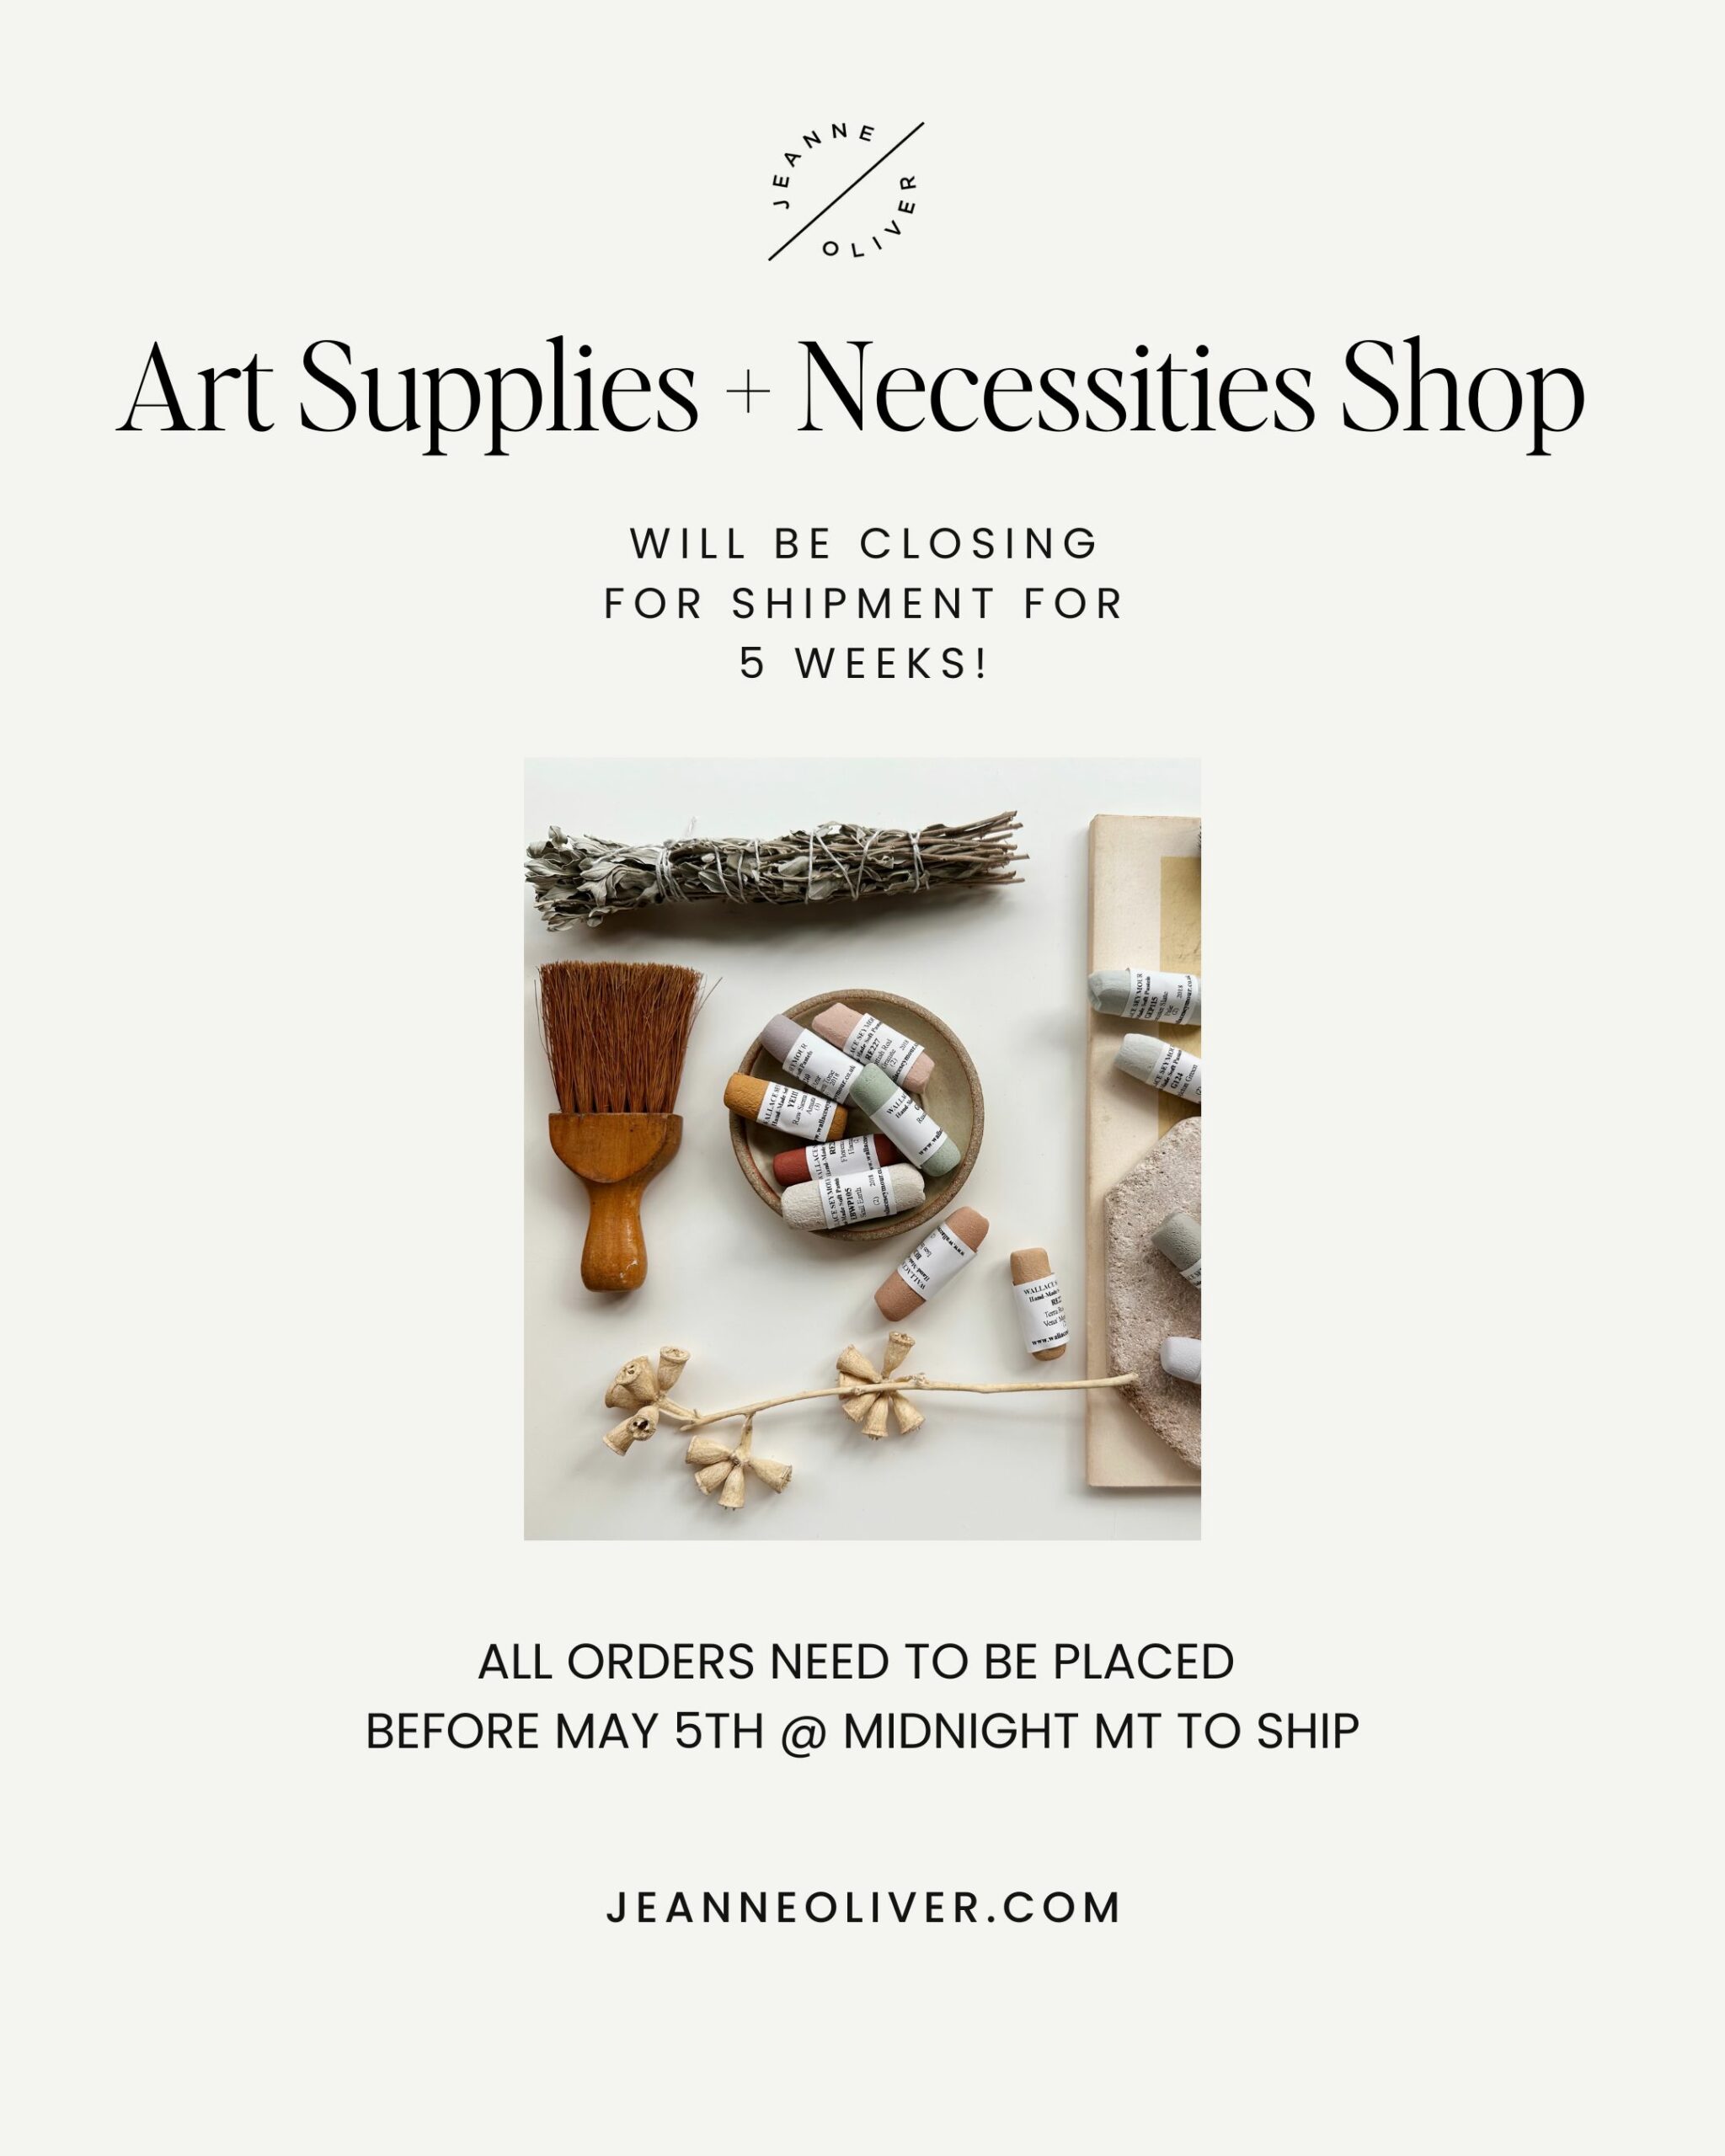 Art Supplies + Necessities Online Shop | Closing for 5 Weeks!